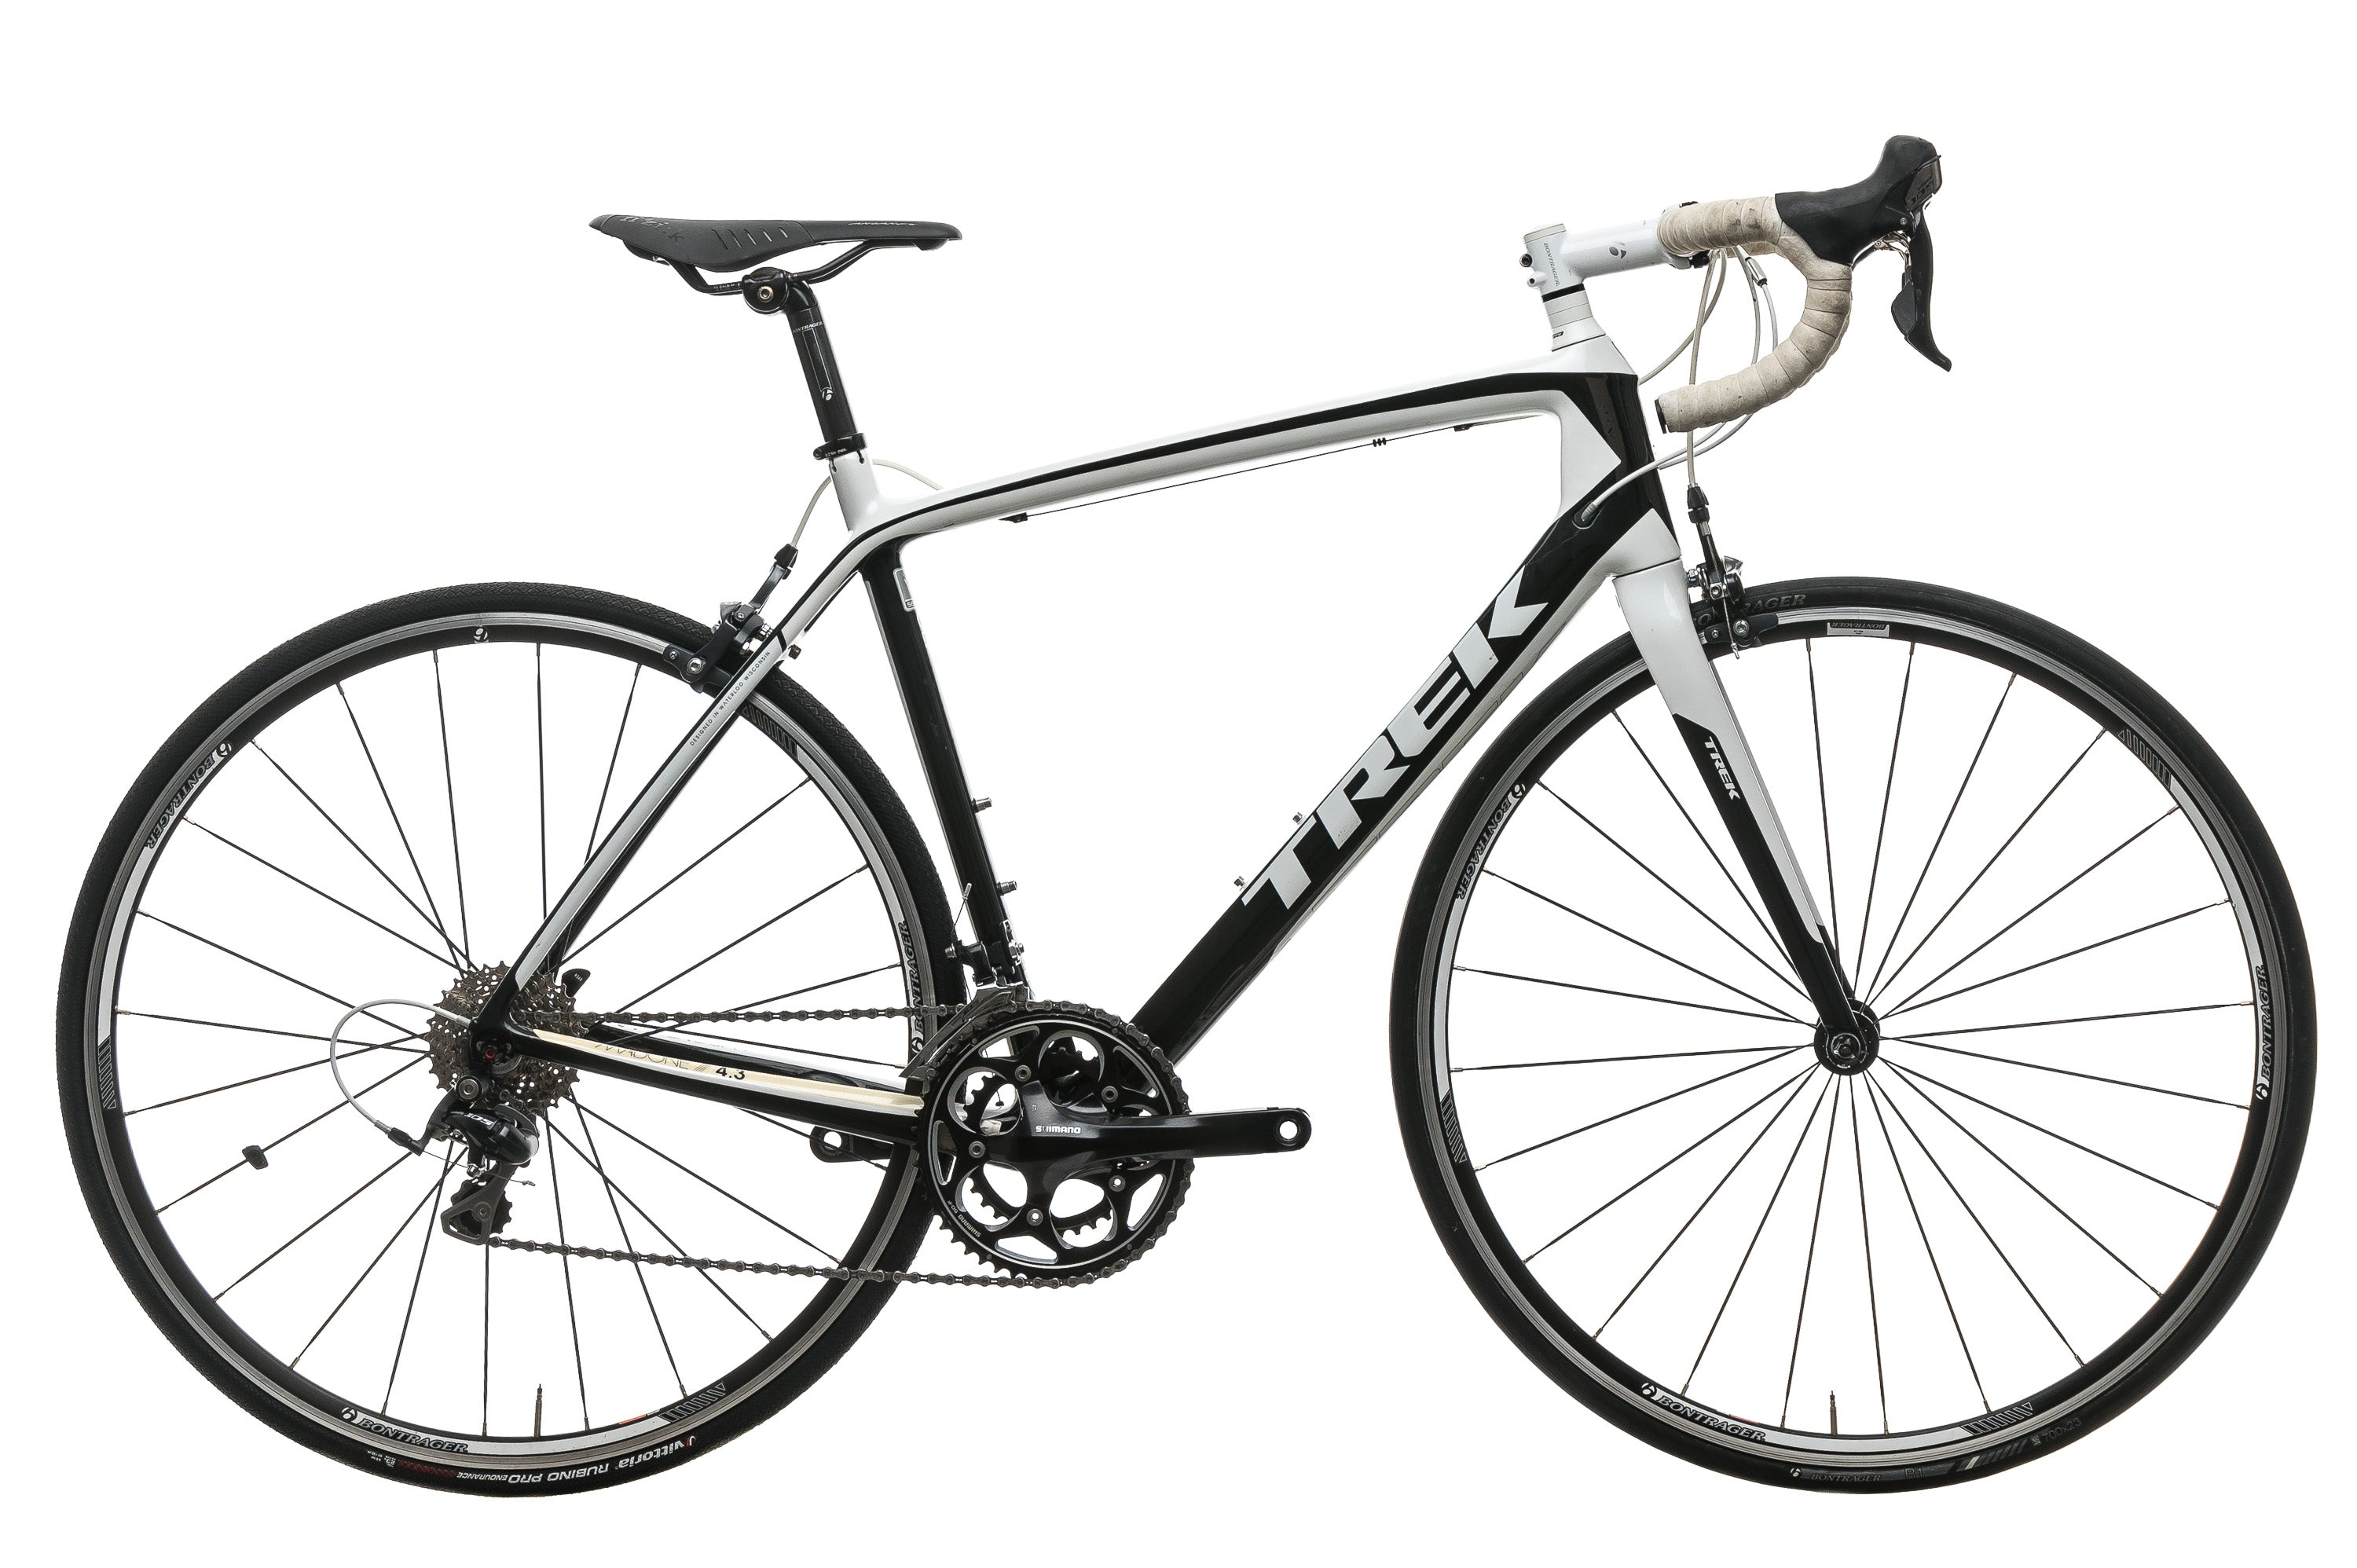 Trek Madone 4.3 H2 Compact Road Bike - 2014, 56cm